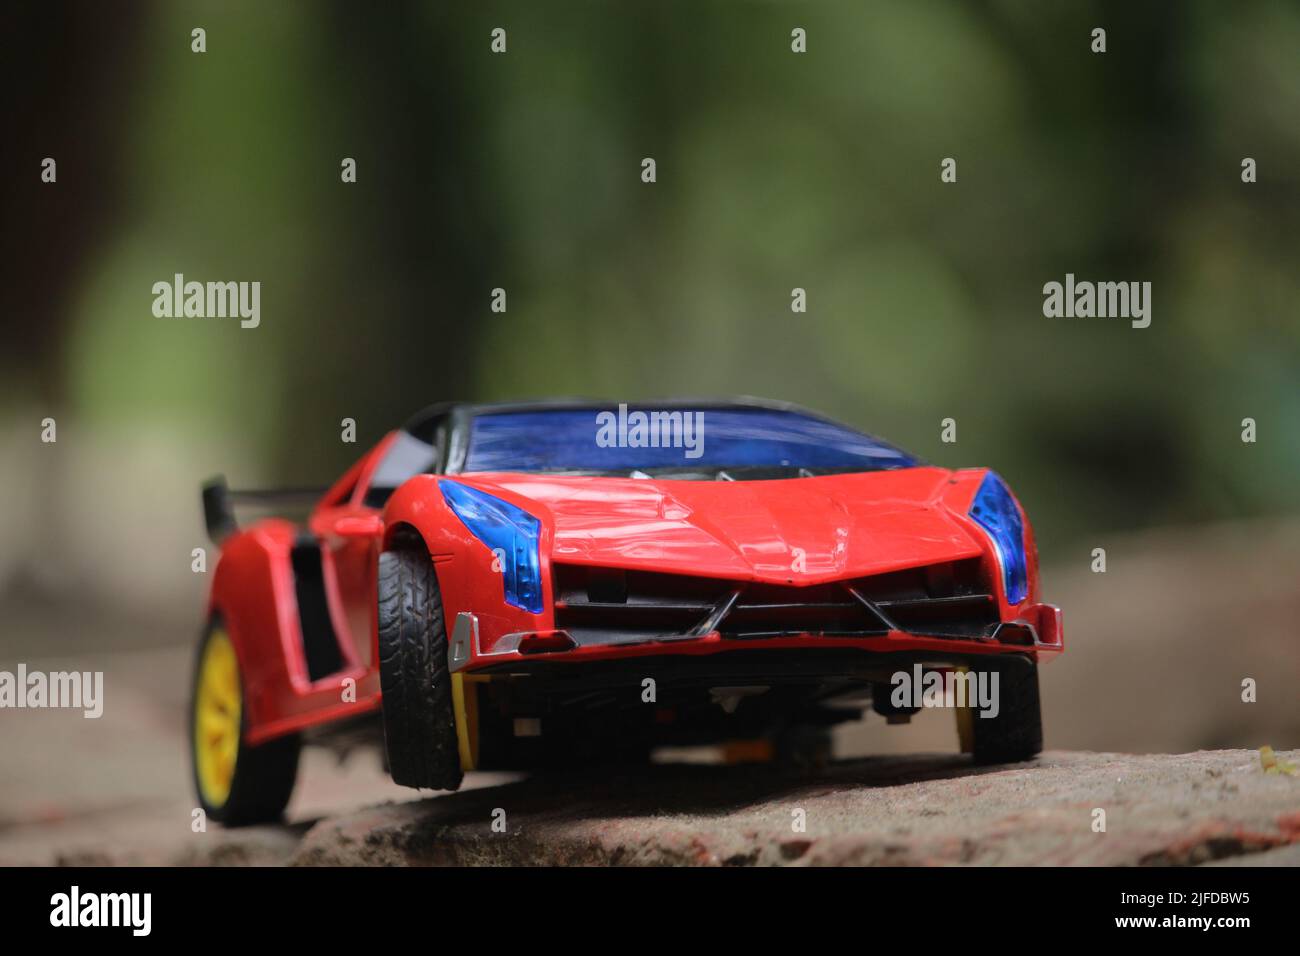 Kinderspielzeug Lamborghini Auto. Stockfoto